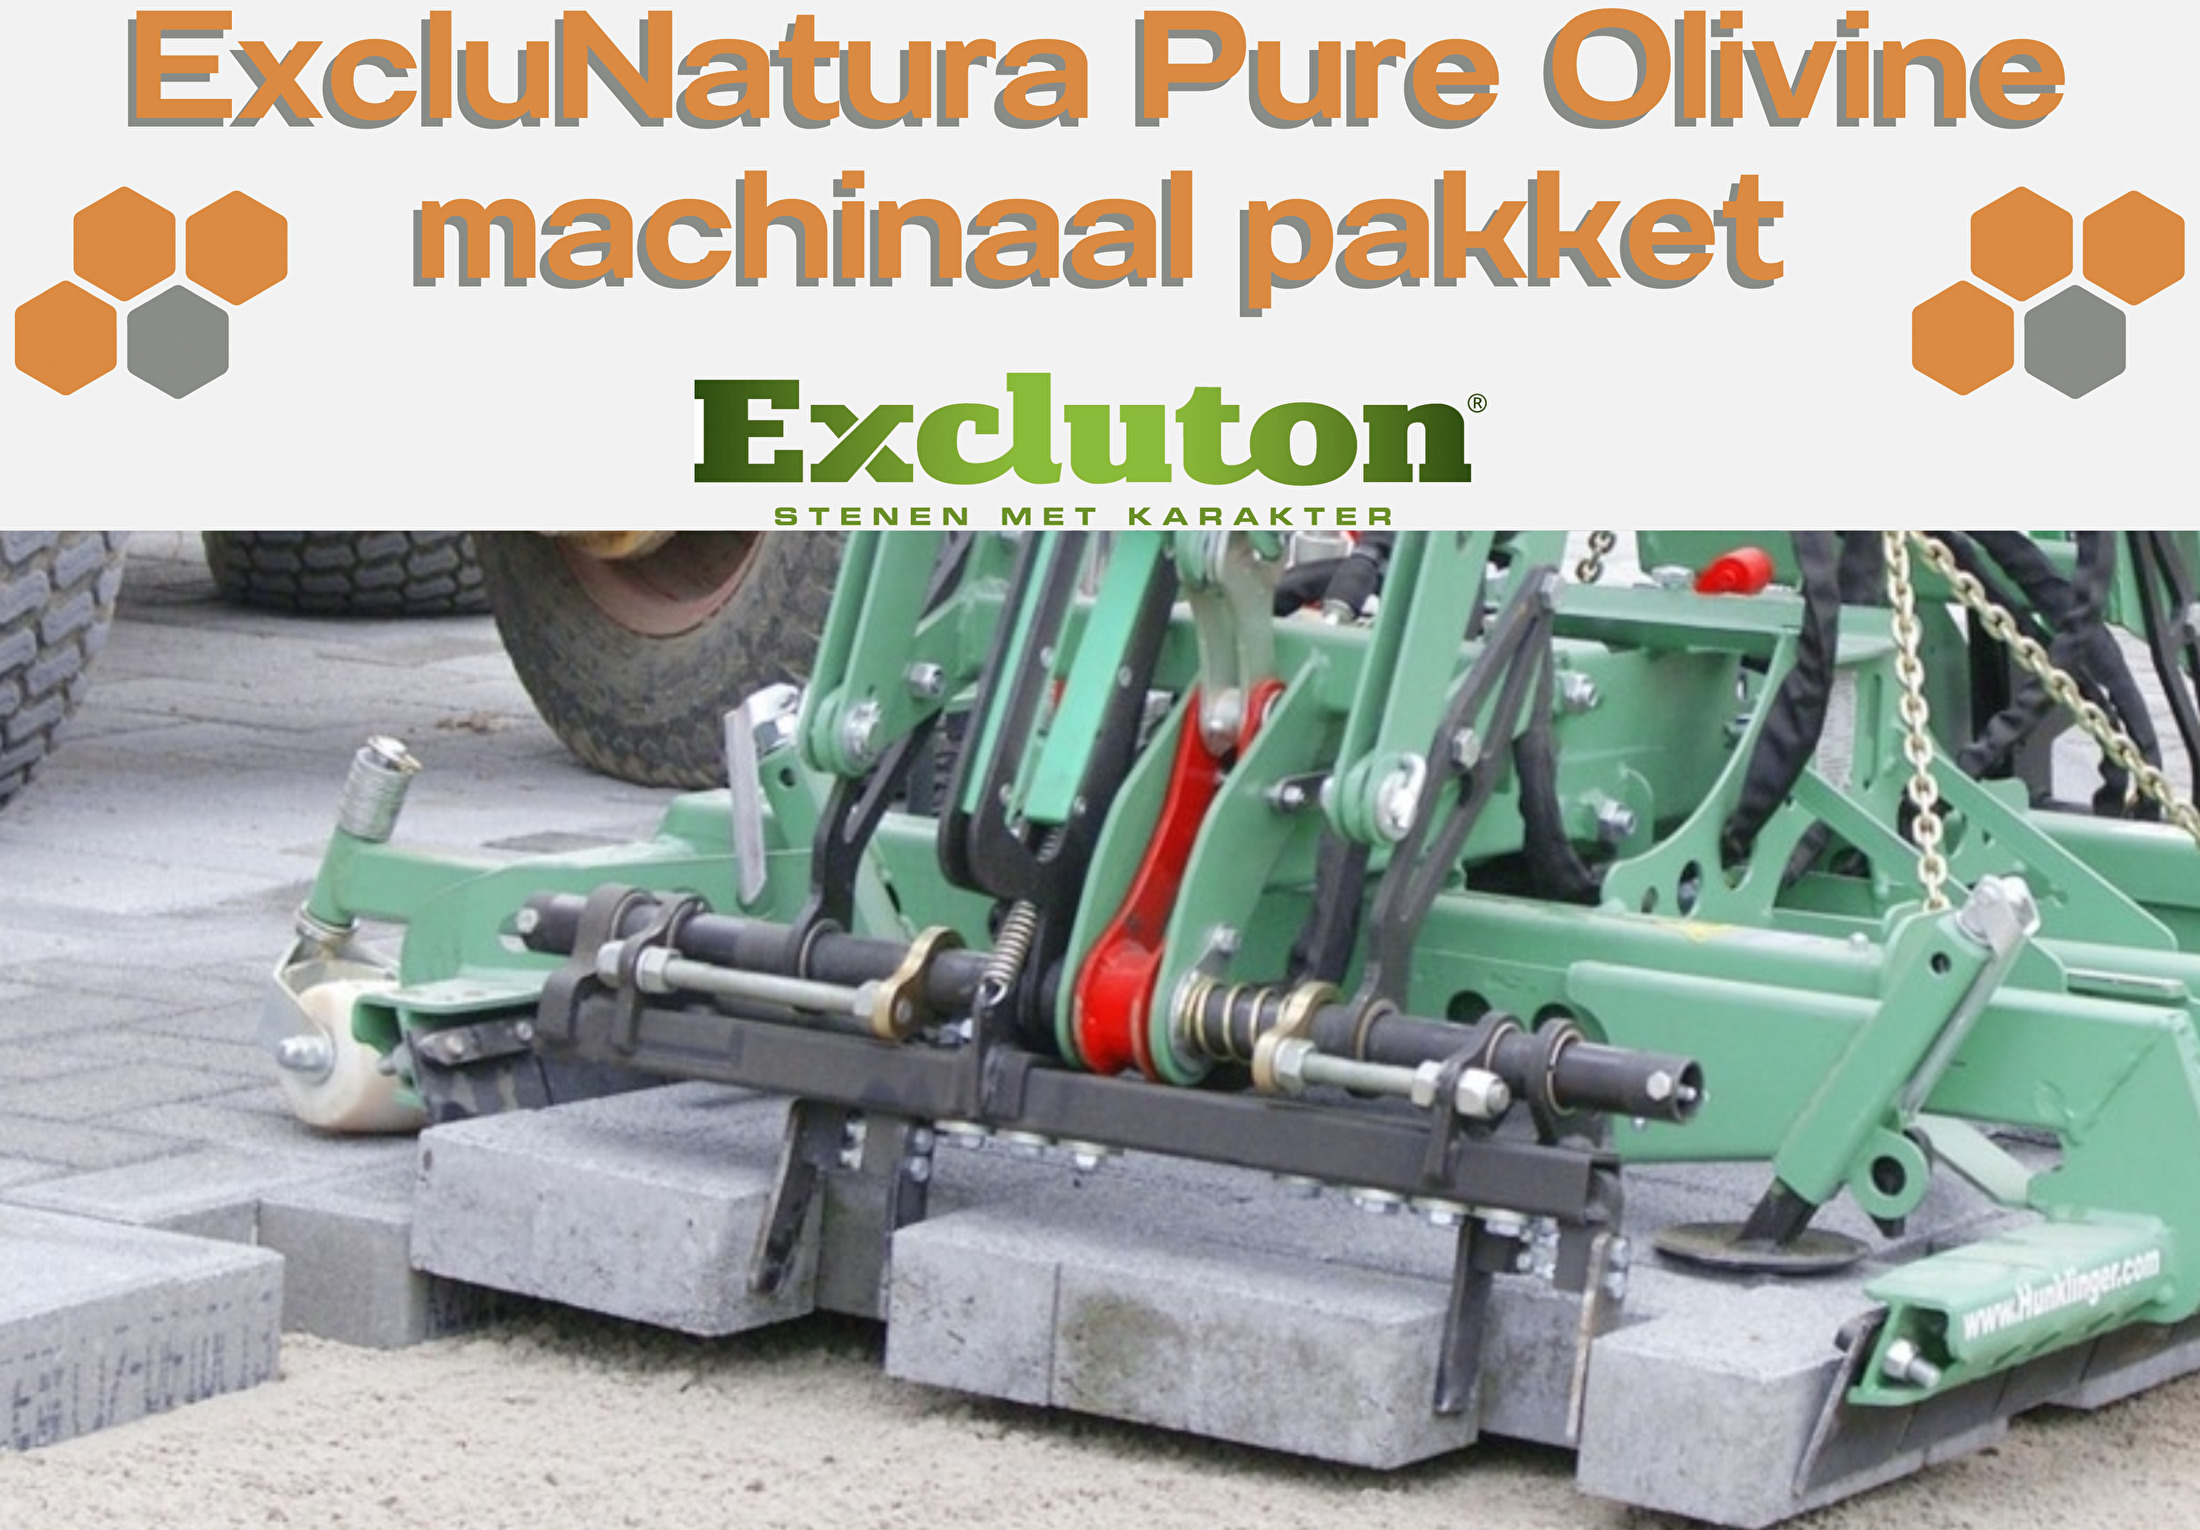 ExcluNatura Pure Olivine machinaal pakket